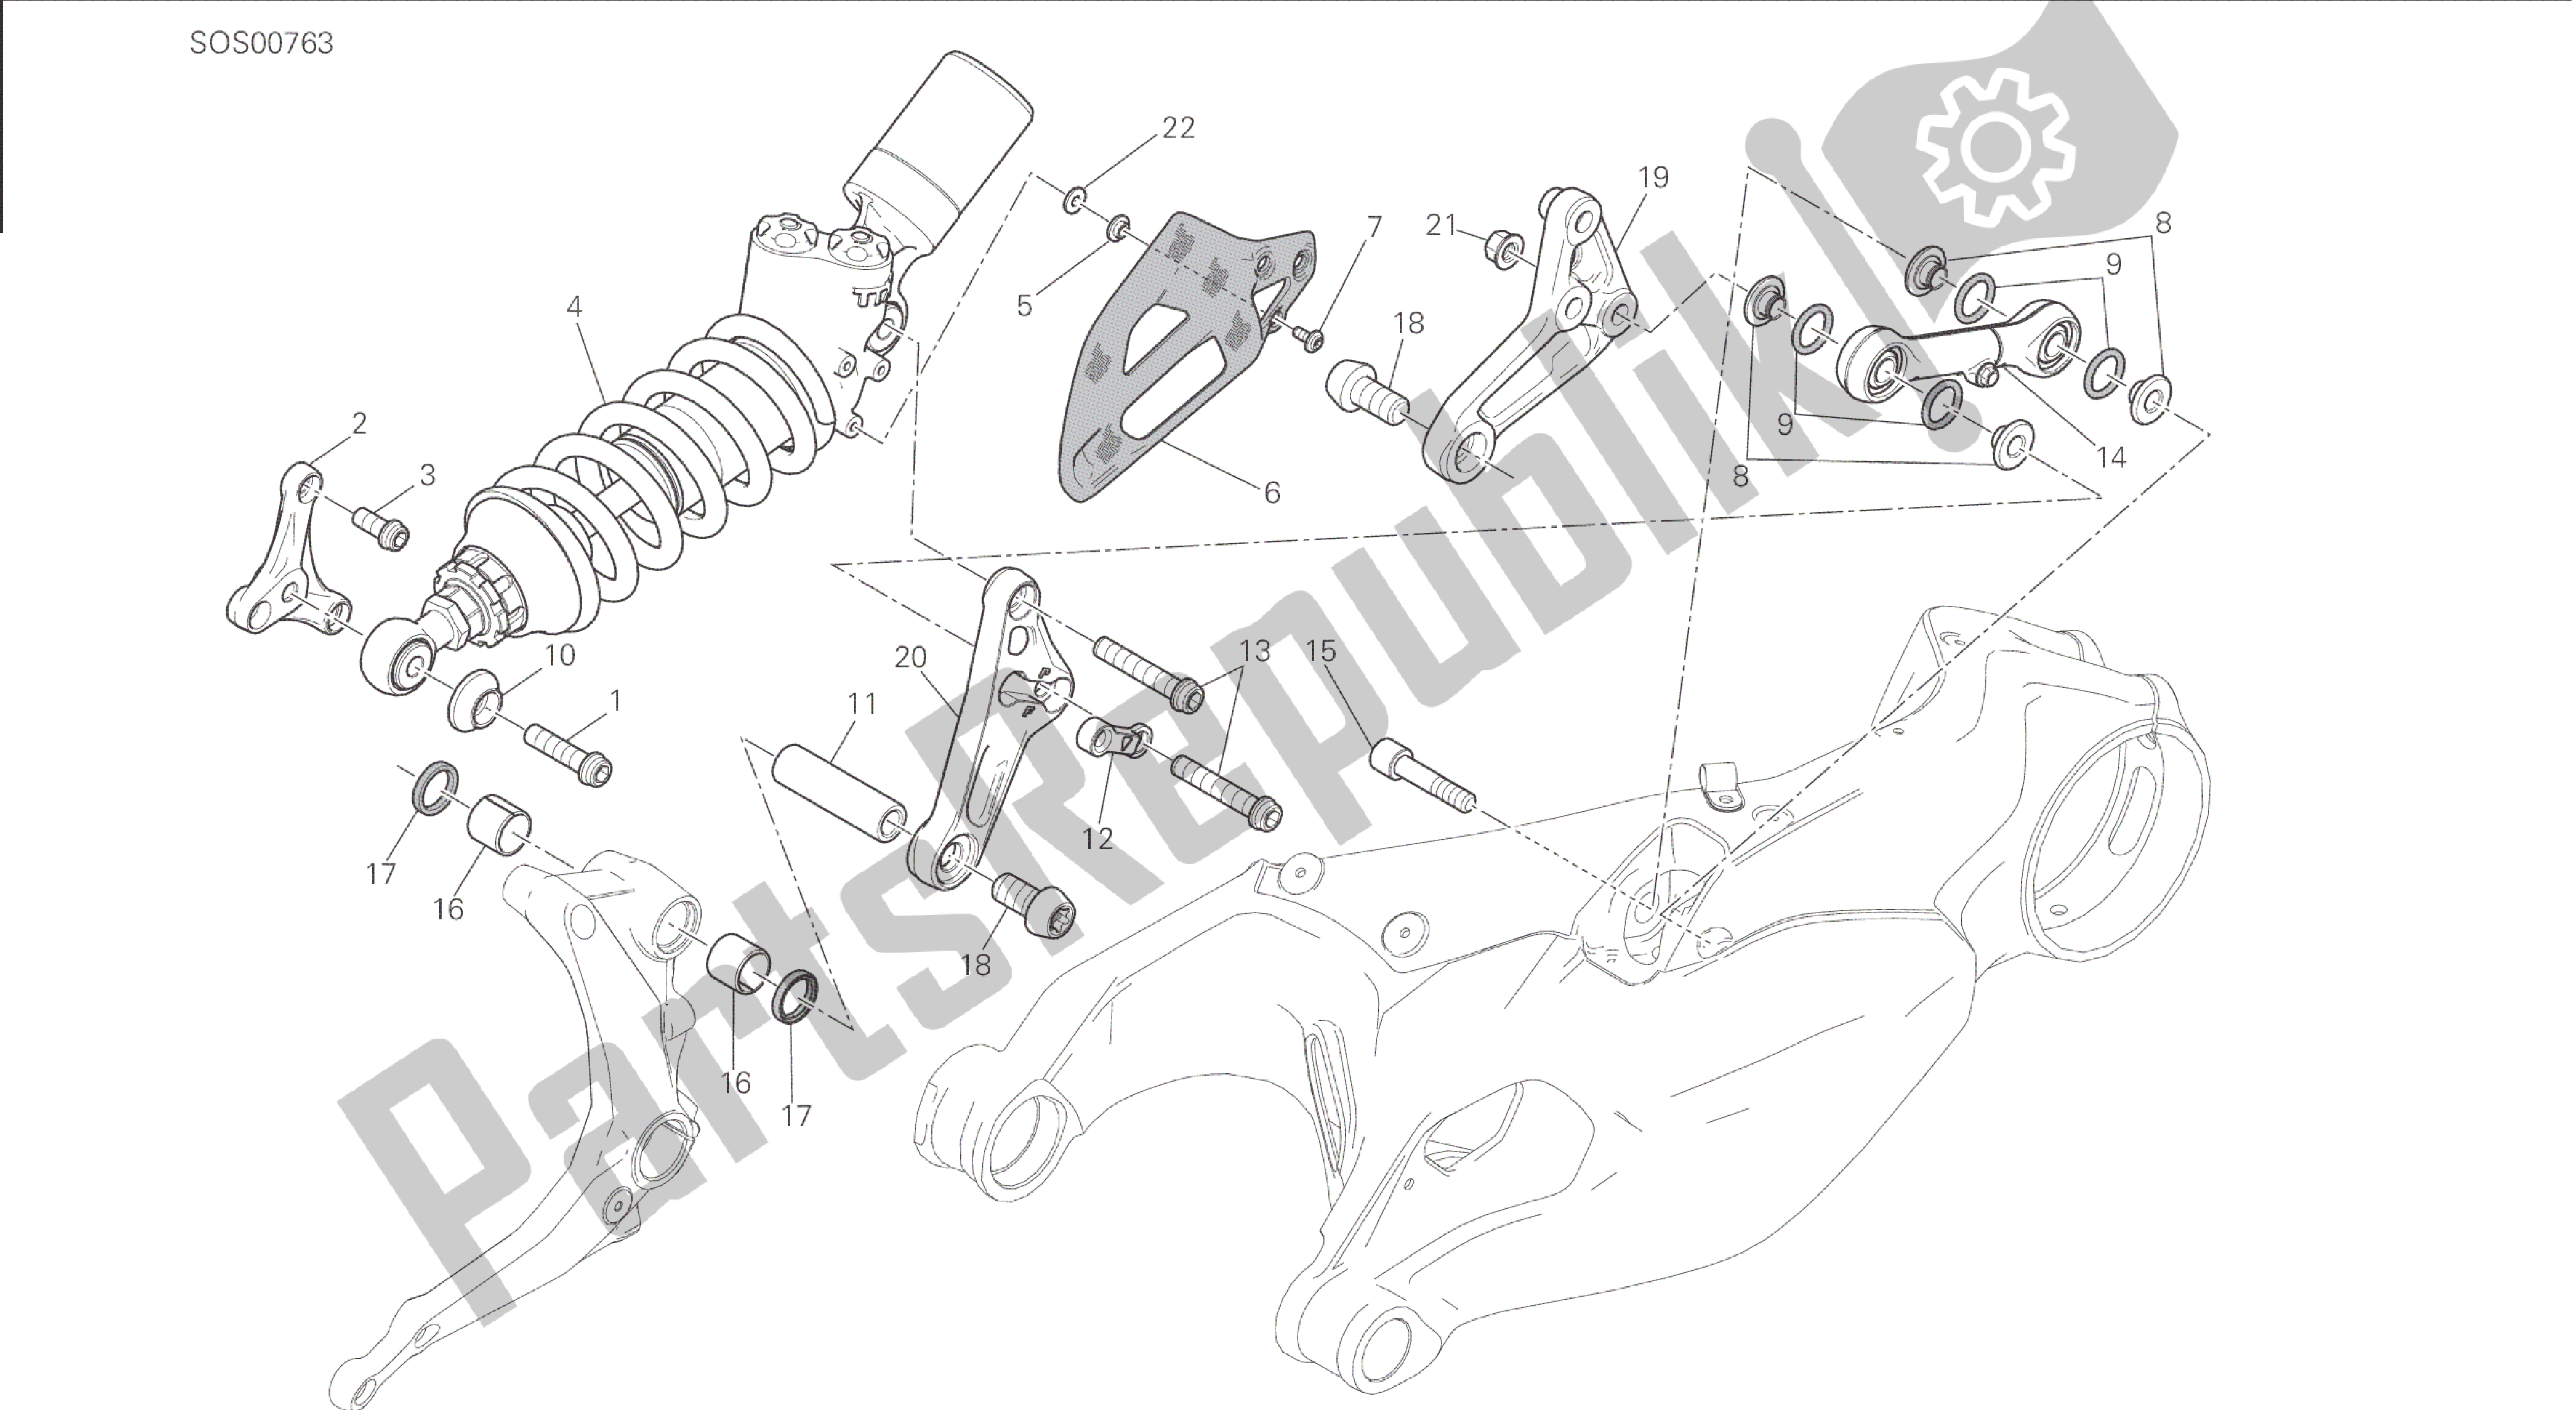 Todas as partes de Desenho 028 - Sospensione Posteriore [mod: 1199 R; Xst: Aus, Eur, Fra, Jap, Twn] Quadro De Grupo do Ducati Panigale 1198 2015